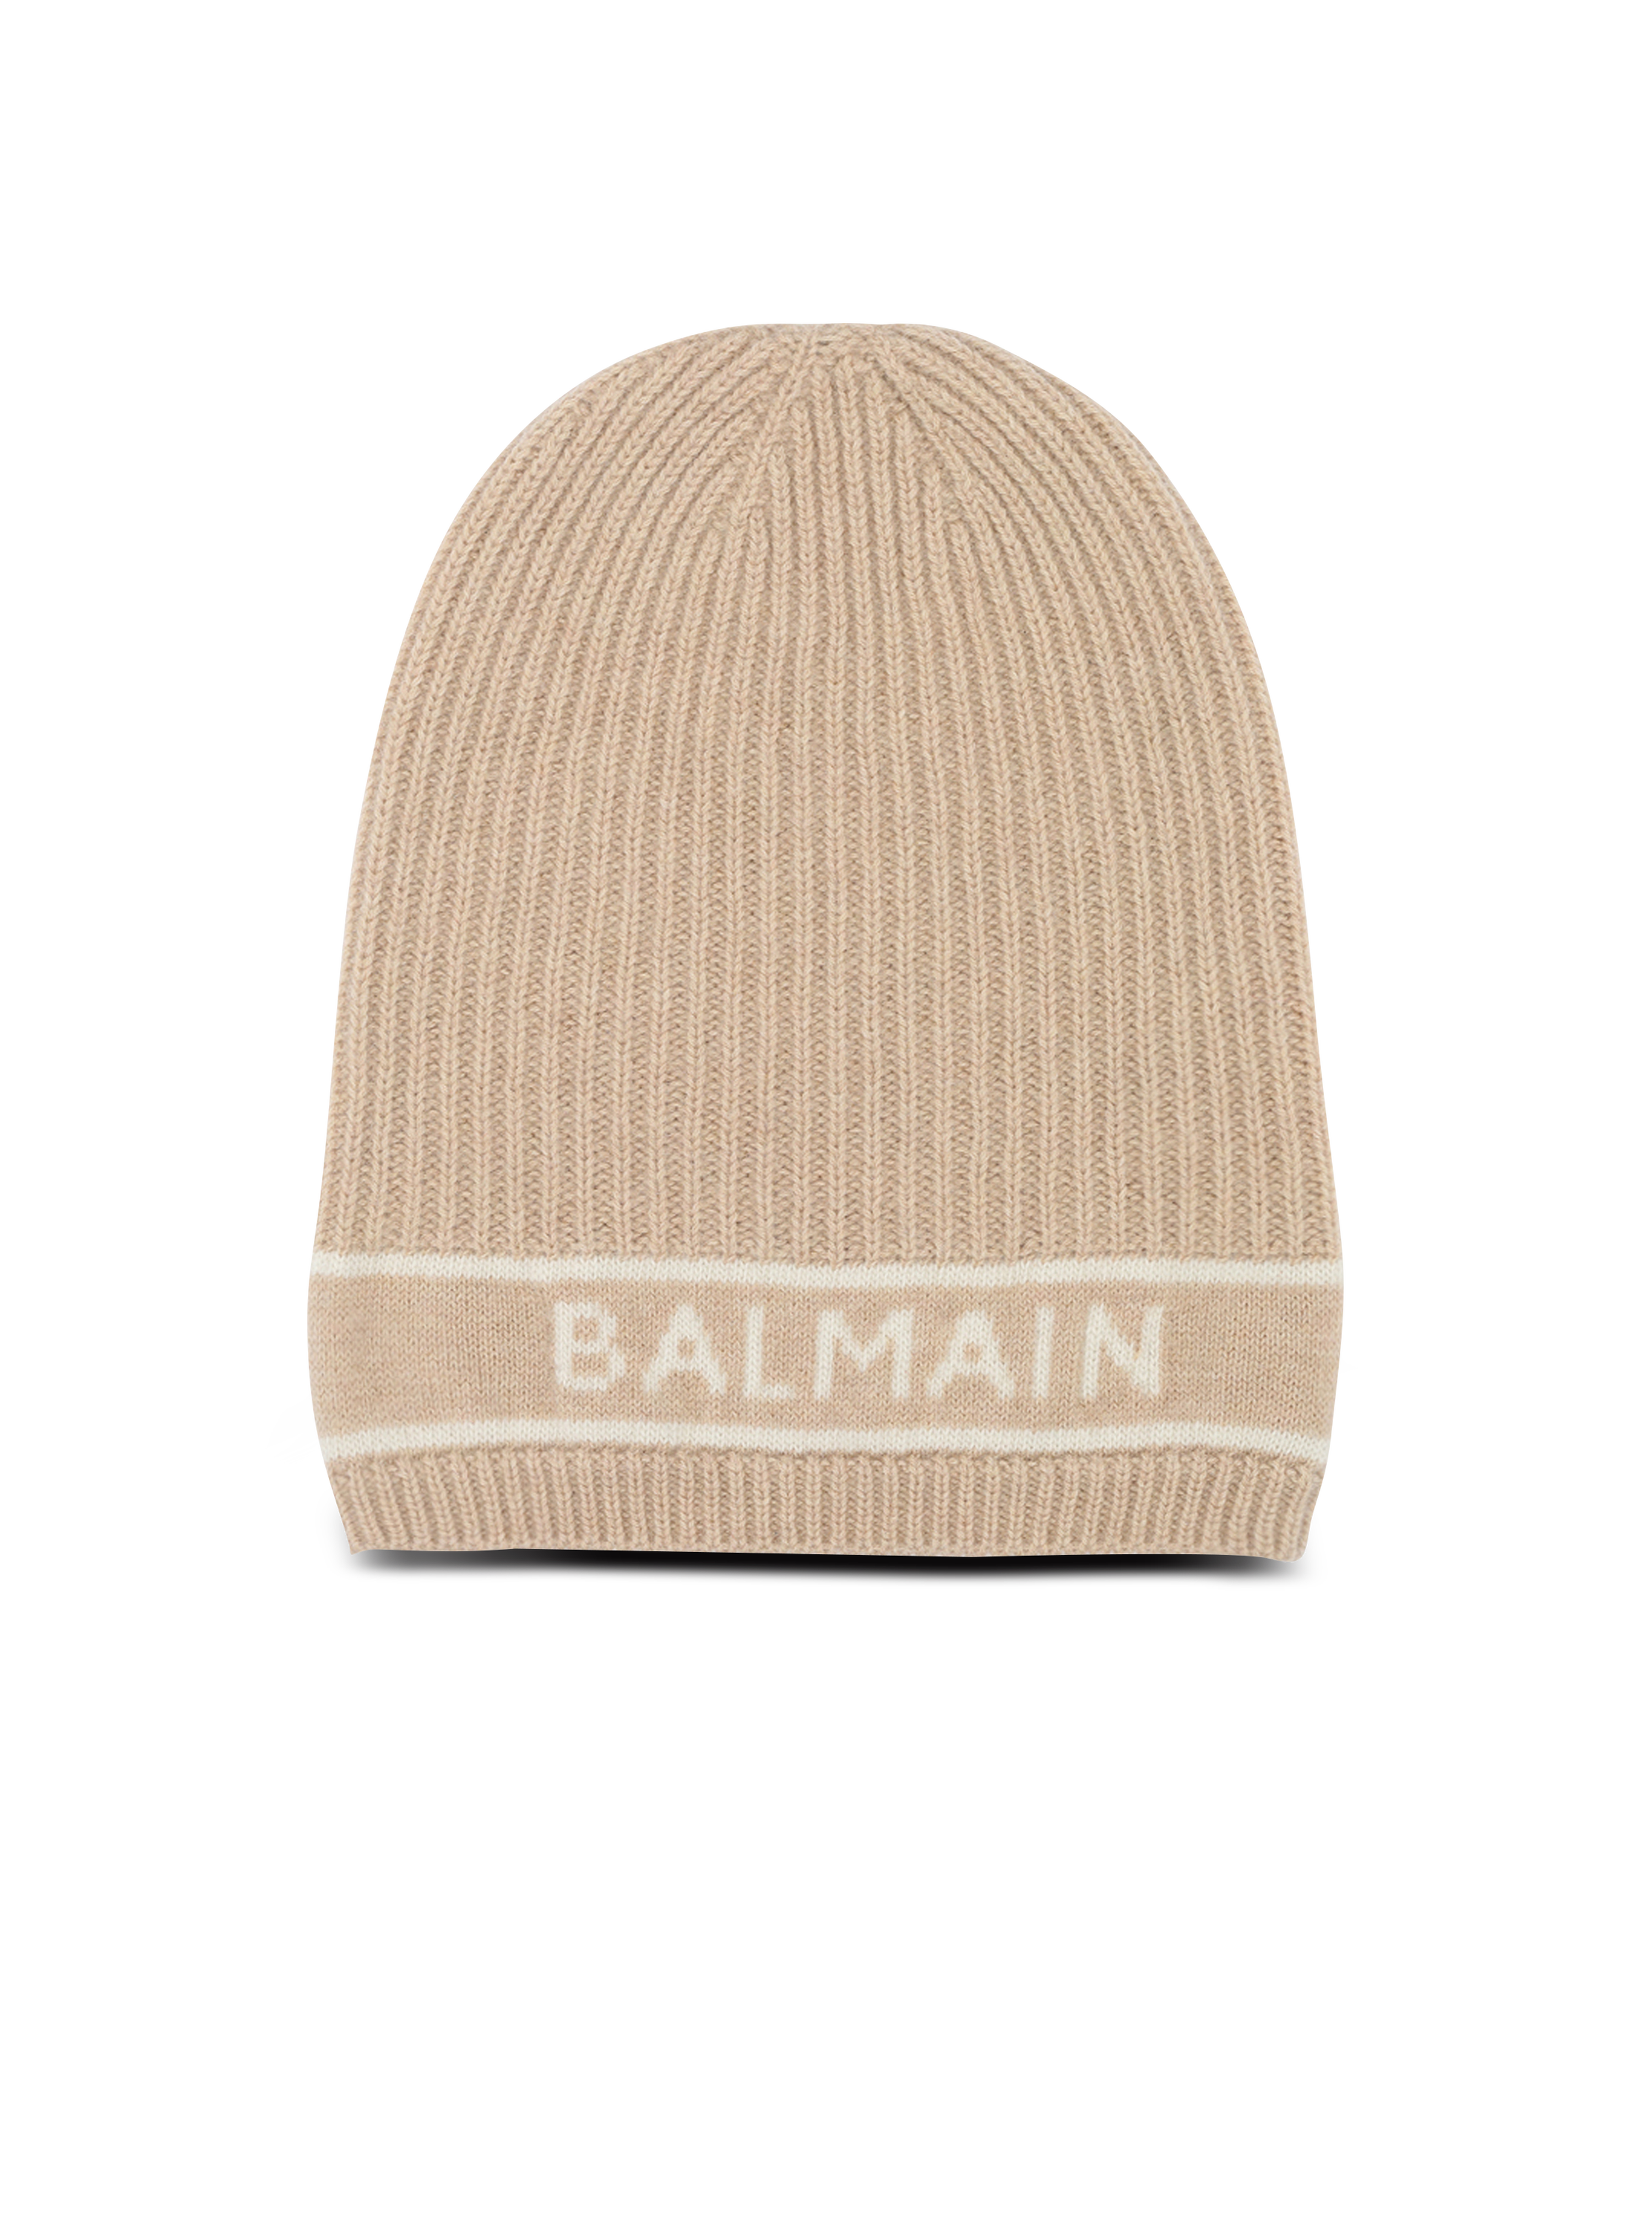 Wool beanie with embroidered Balmain logo, beige, hi-res